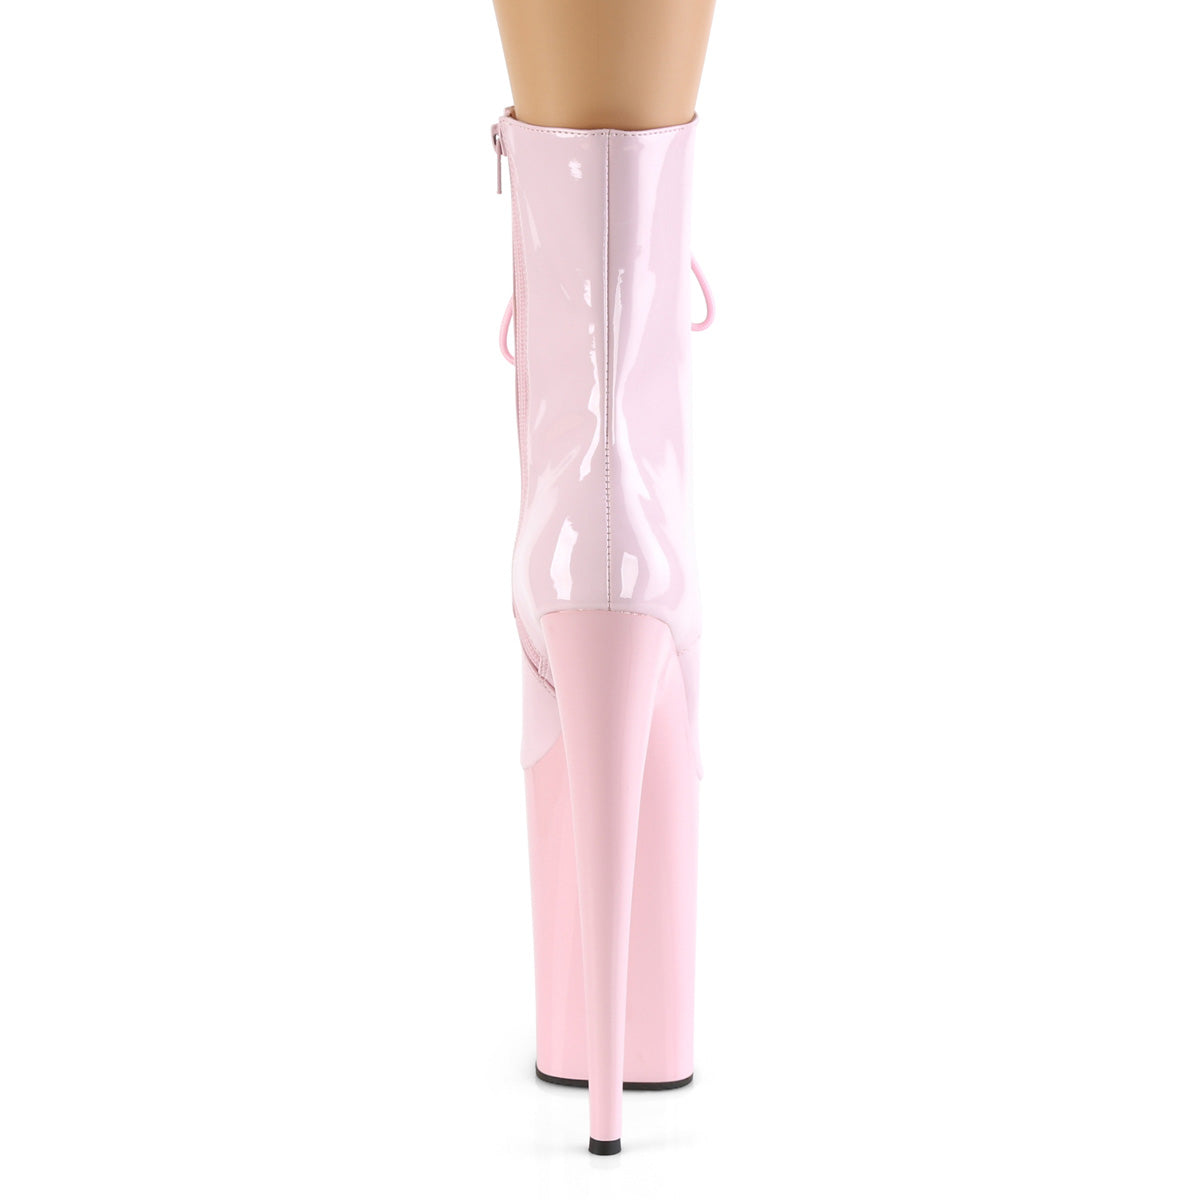 INFINITY-1020 9" Heel Baby Pink Pole Dancing Platforms-Pleaser- Sexy Shoes Fetish Footwear